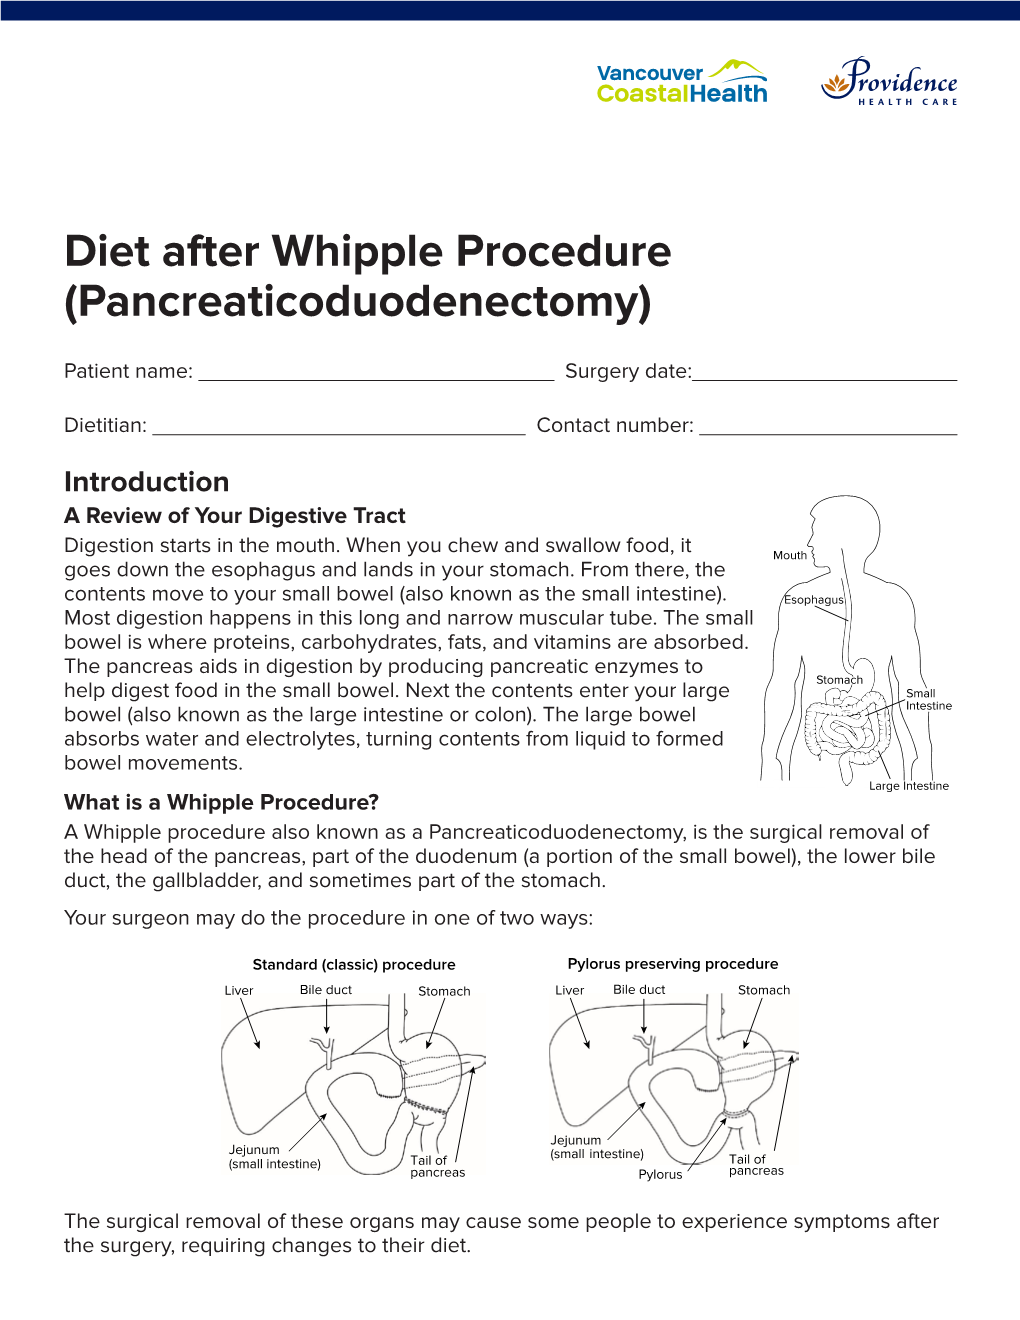 Diet After Whipple Procedure (Pancreaticoduodenectomy)